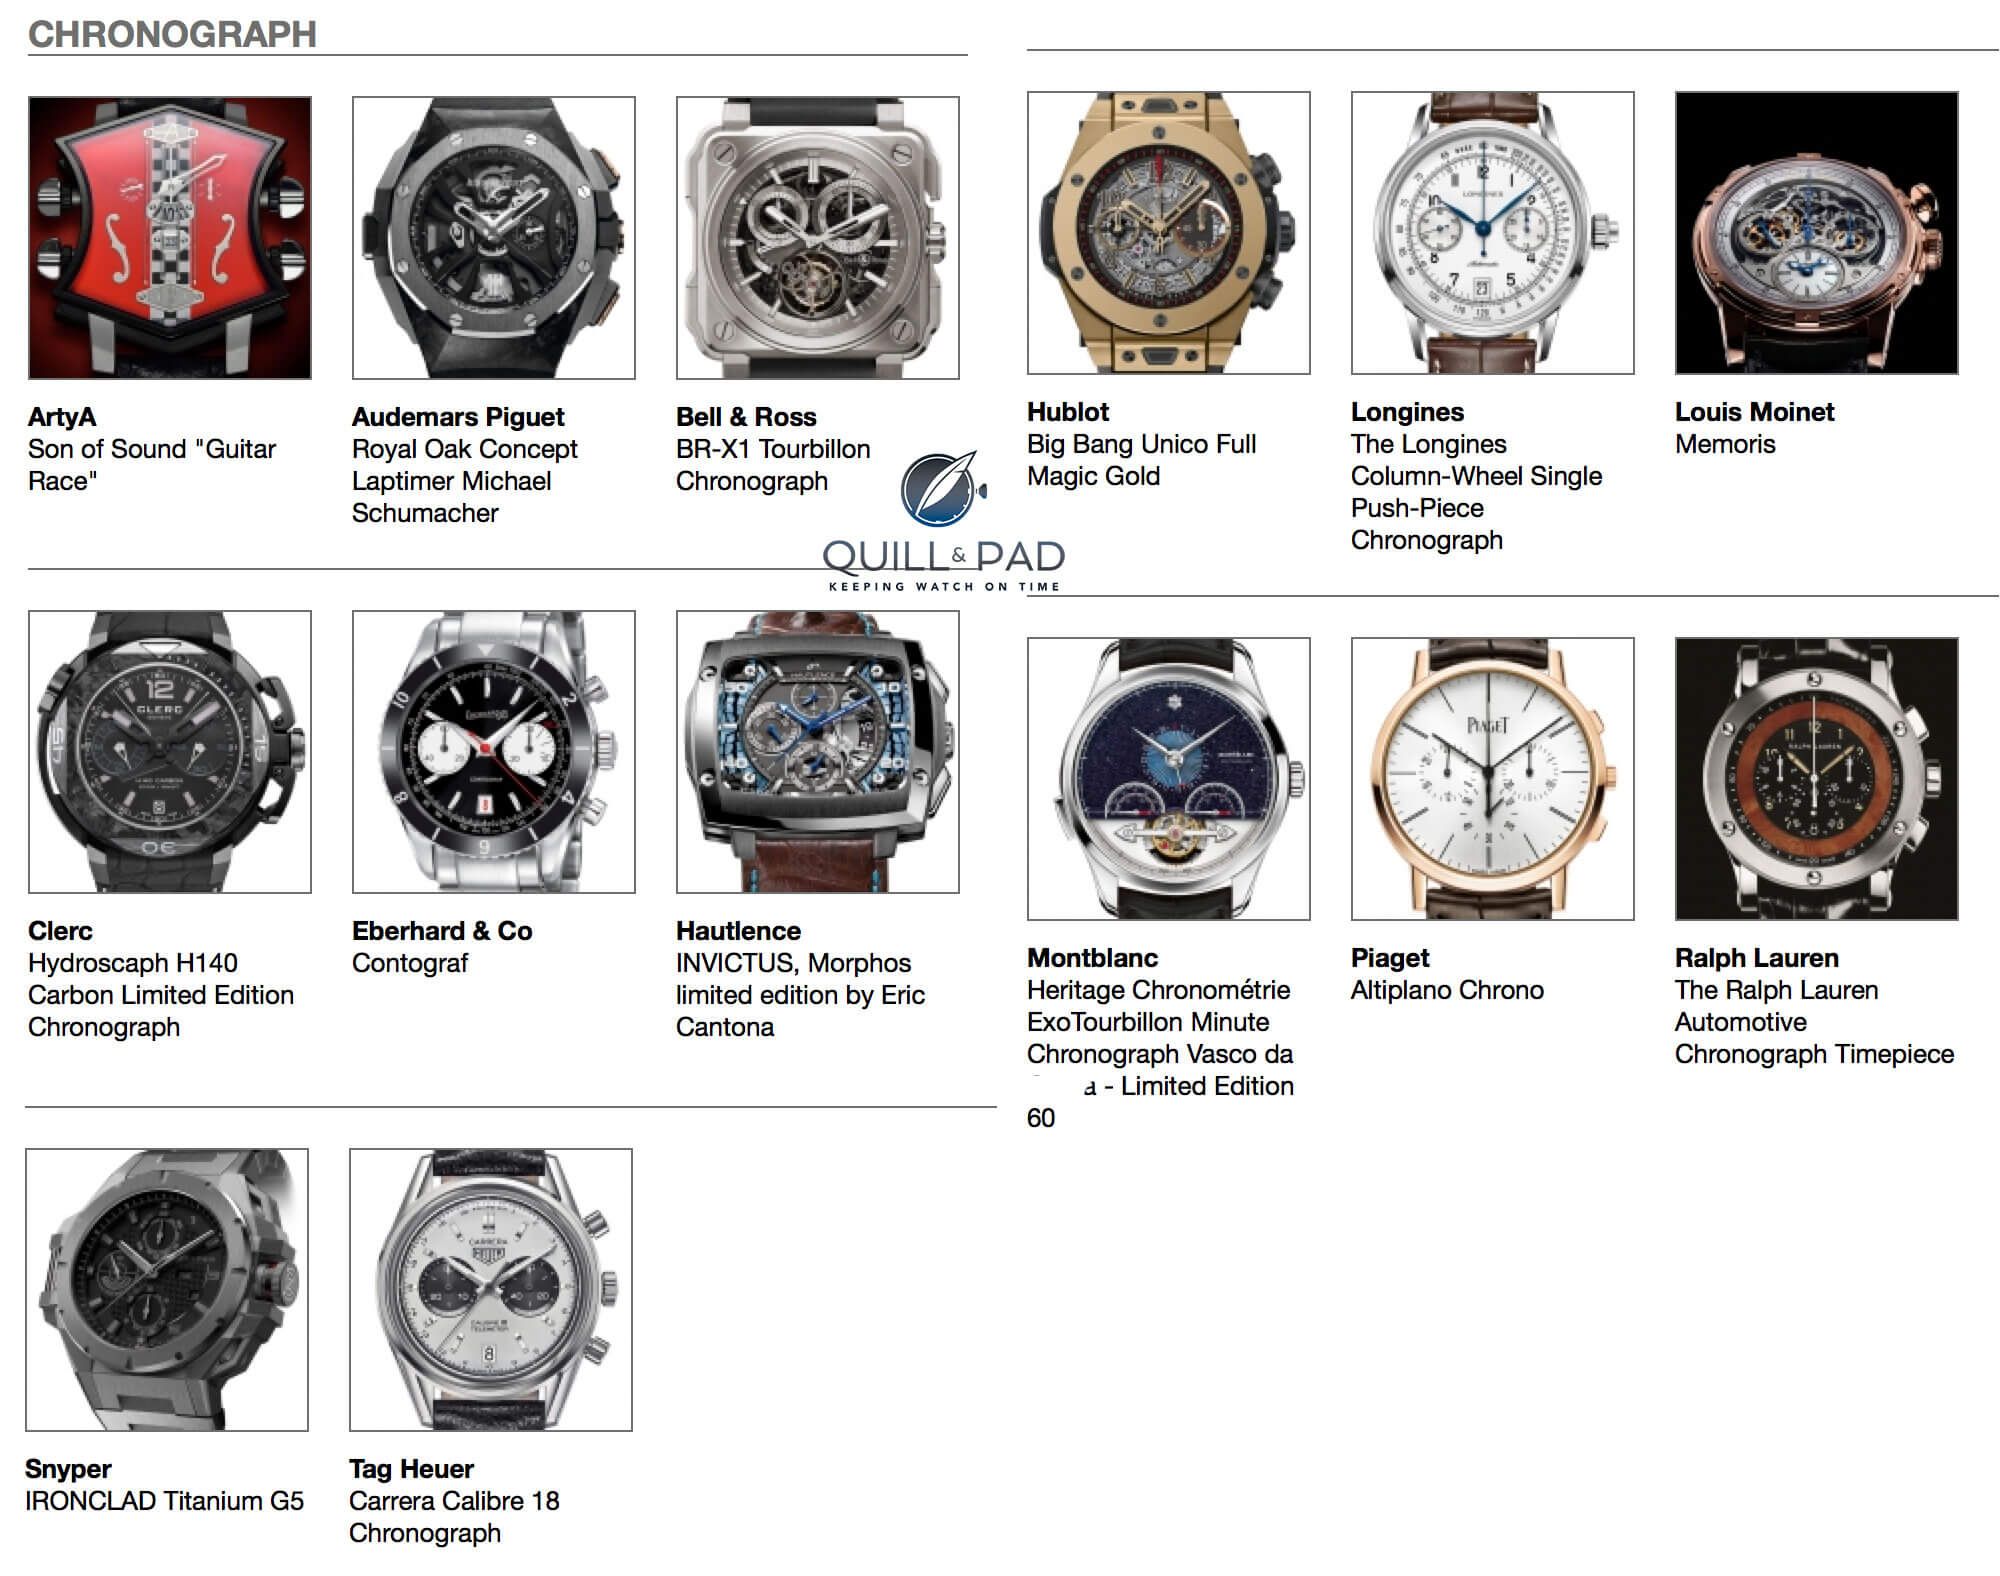 Chronograph watches entered in the 2015 Grand Prix d’Horlogerie de Genève